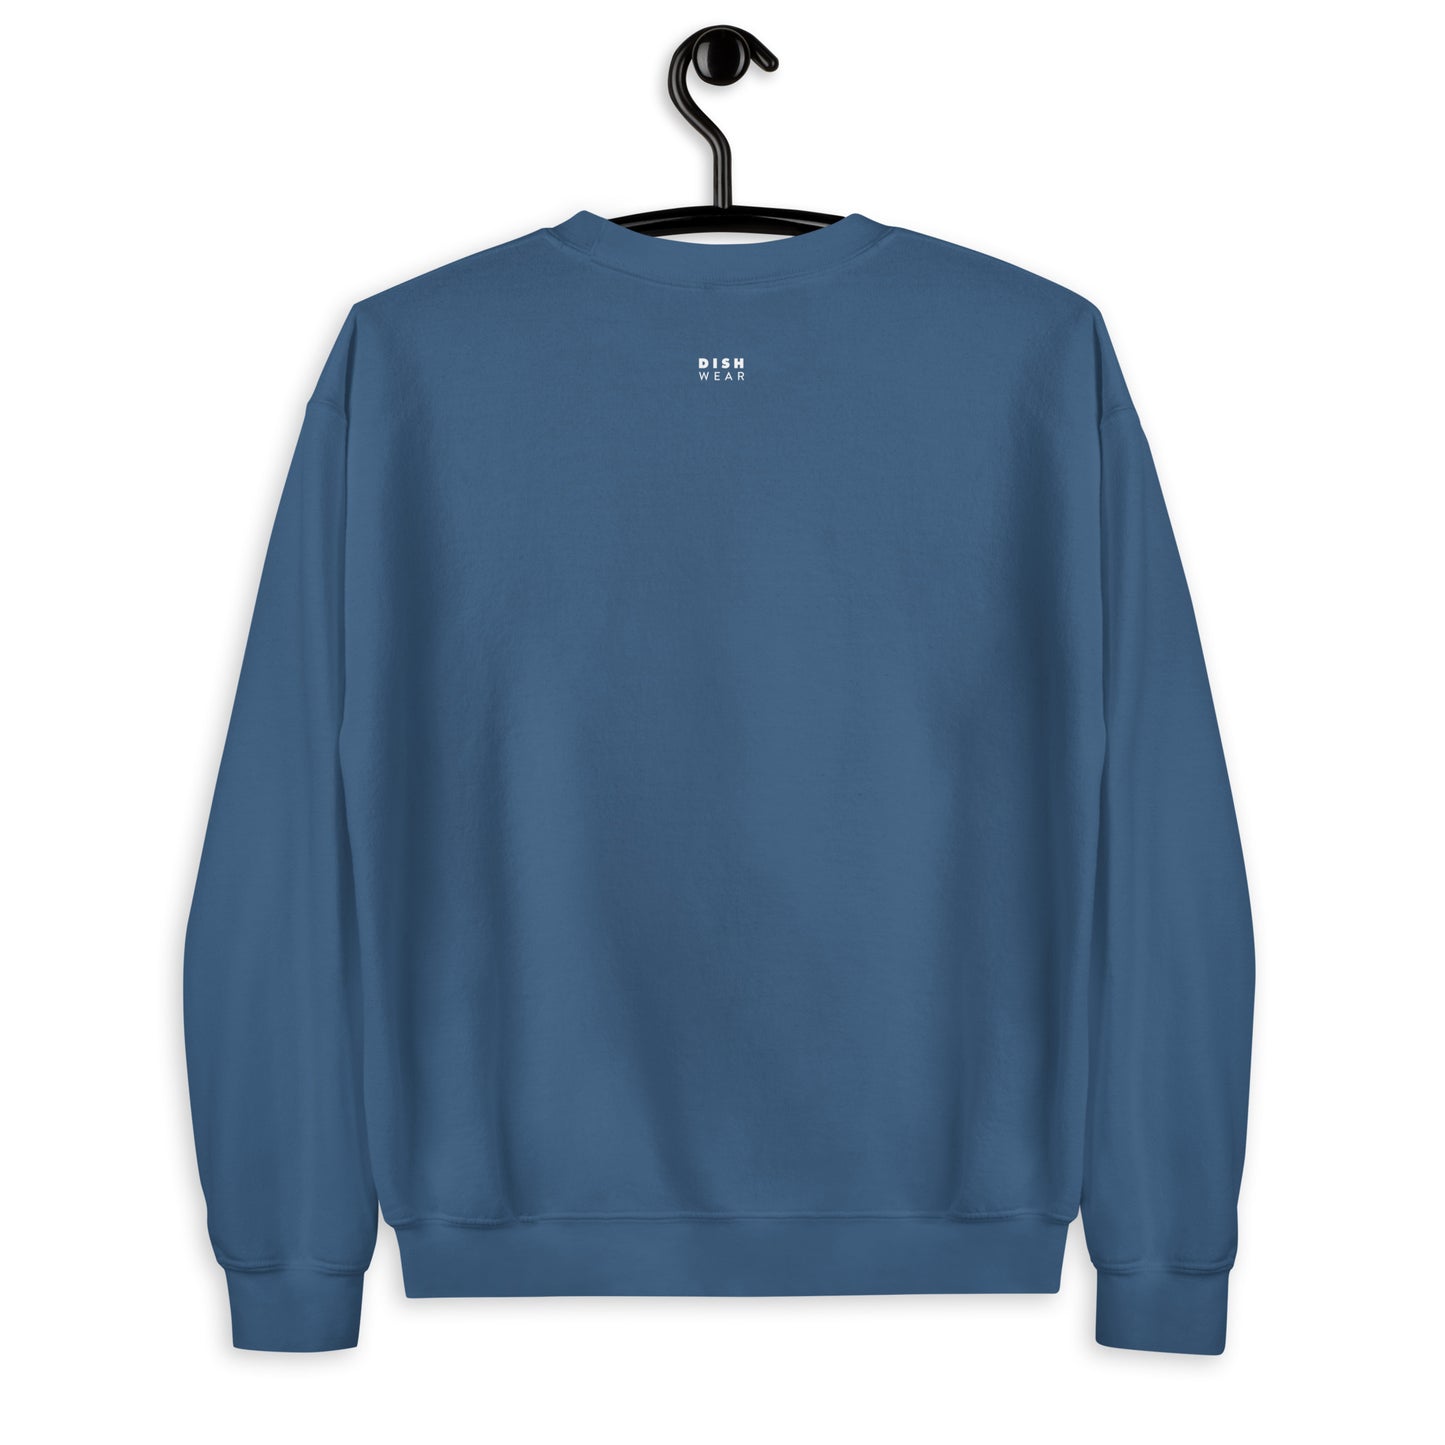 Sweet Gherkins Sweatshirt - Straight Font